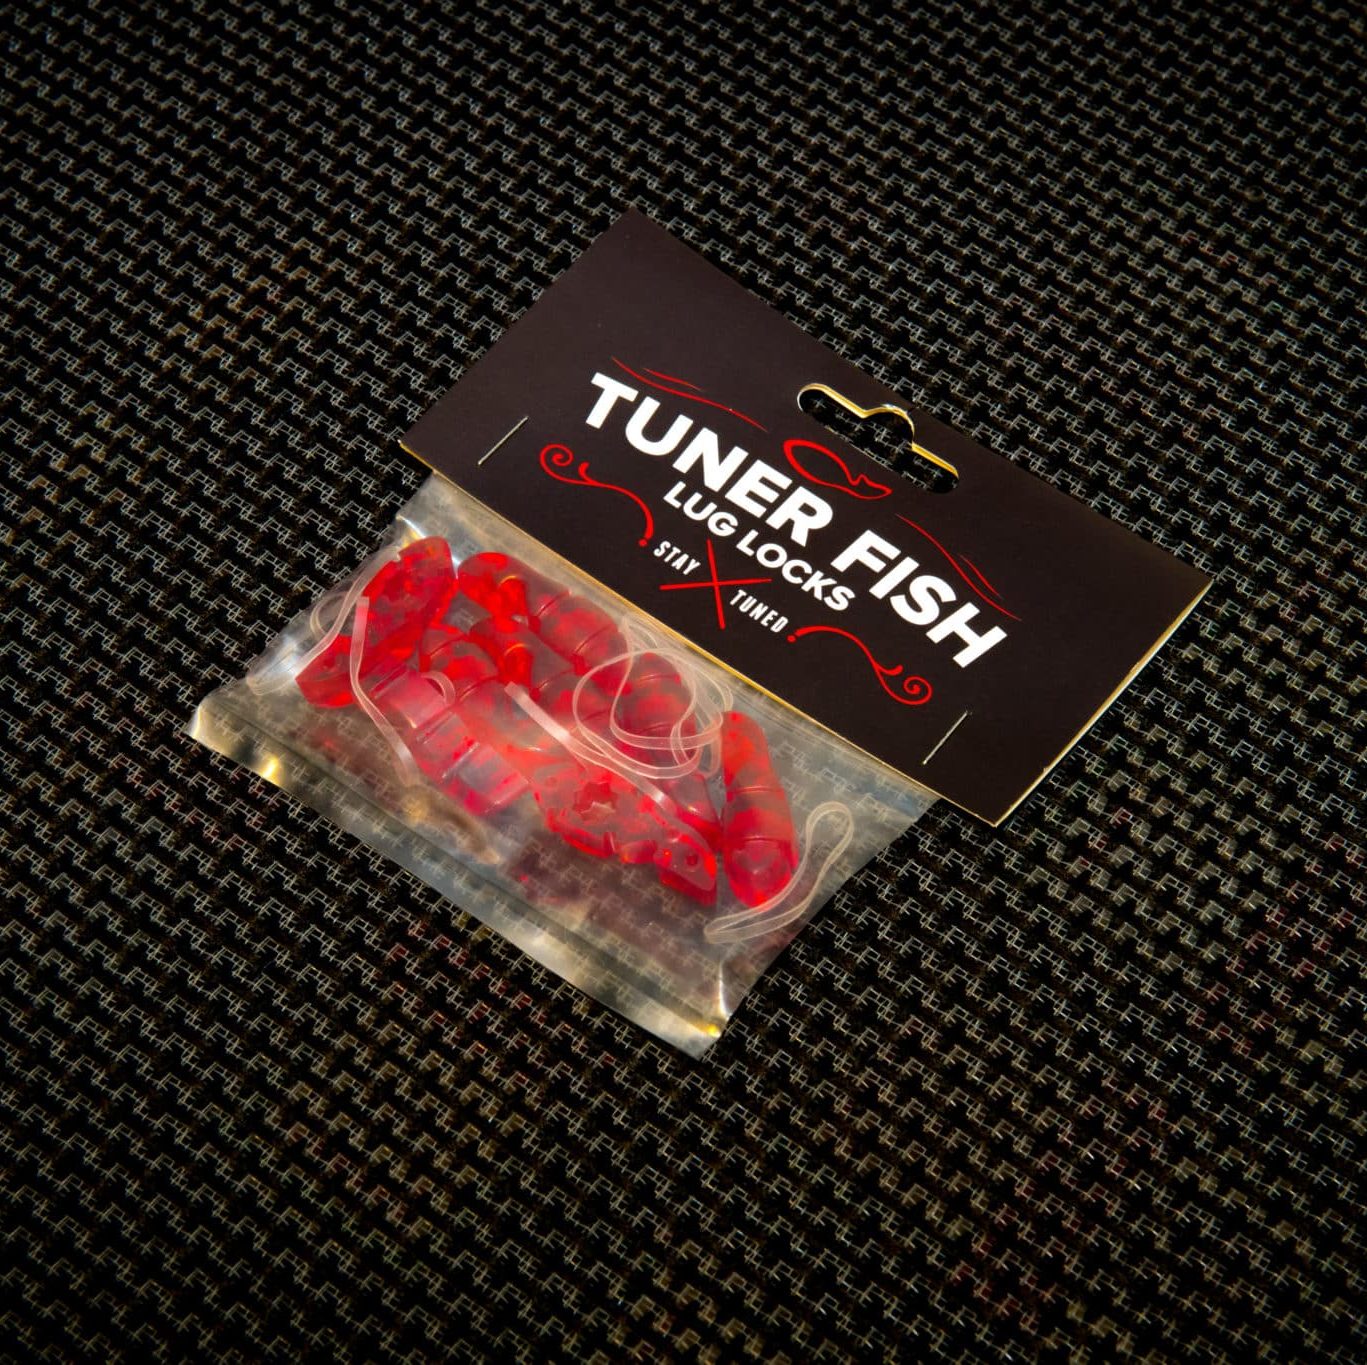 Tuner Fish Lug Locks Red 8 Pack 4